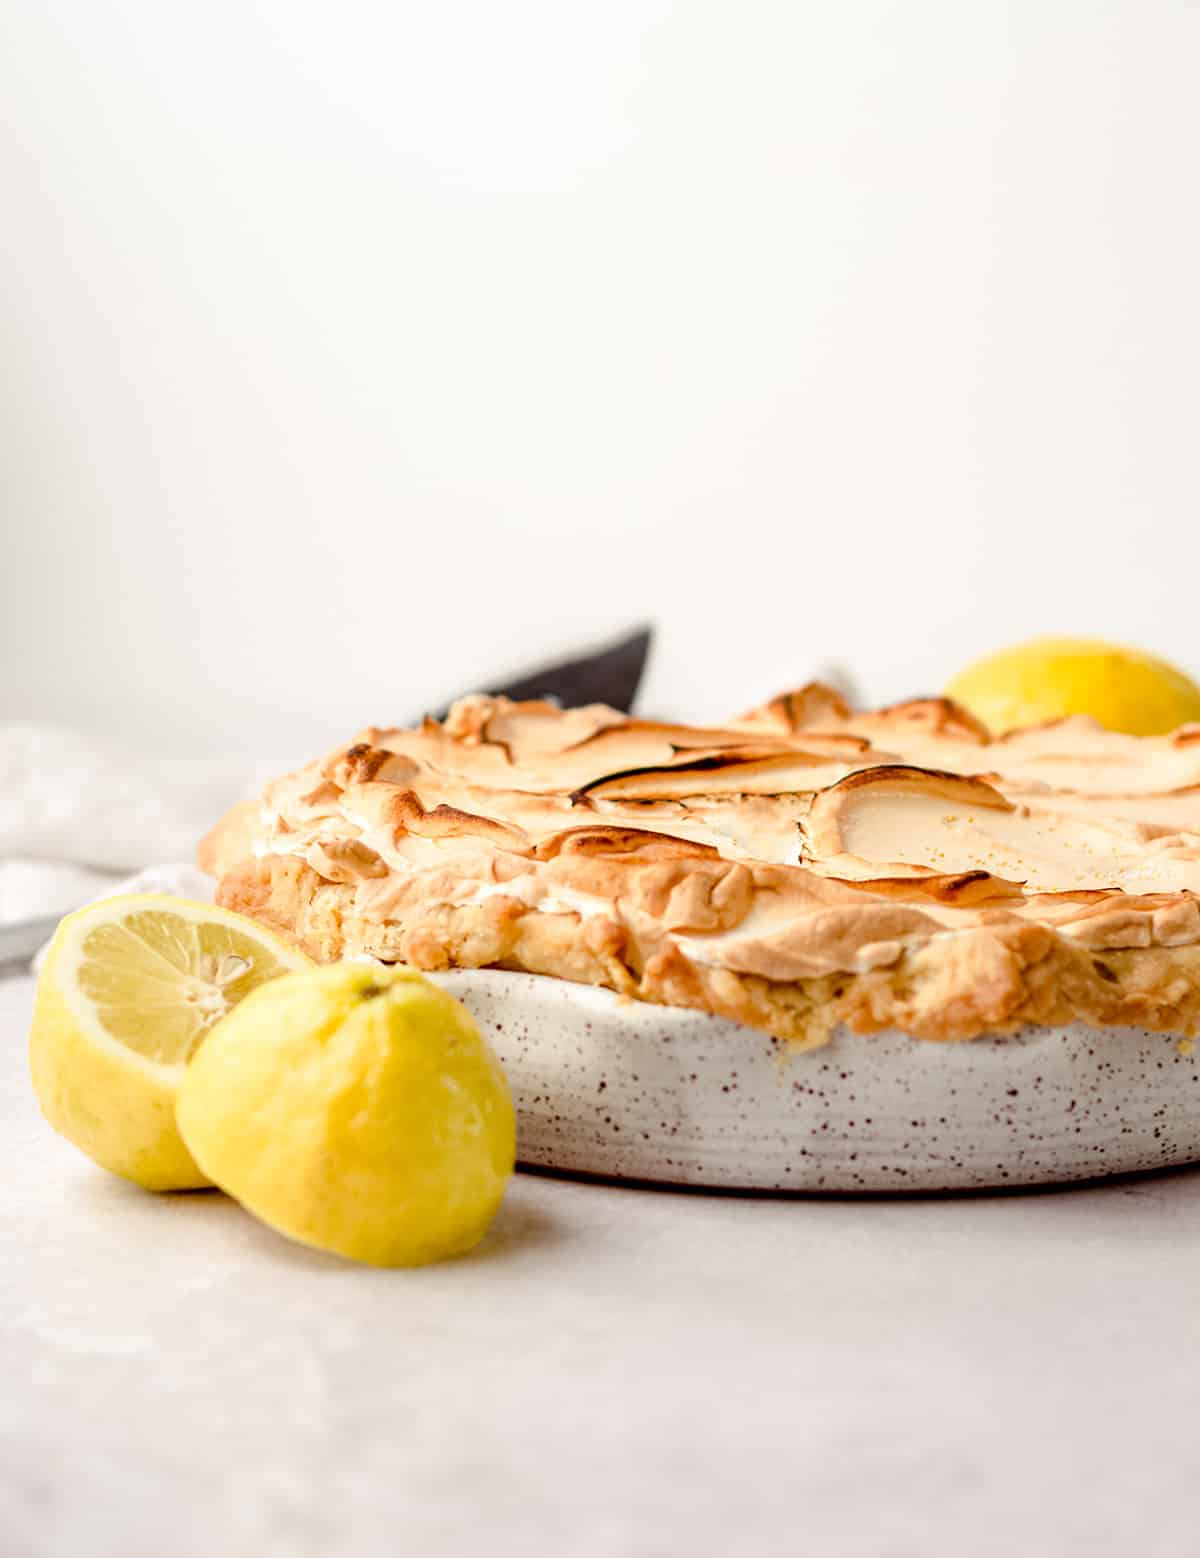 A side view of a lemon meringue pie with browned meringue.